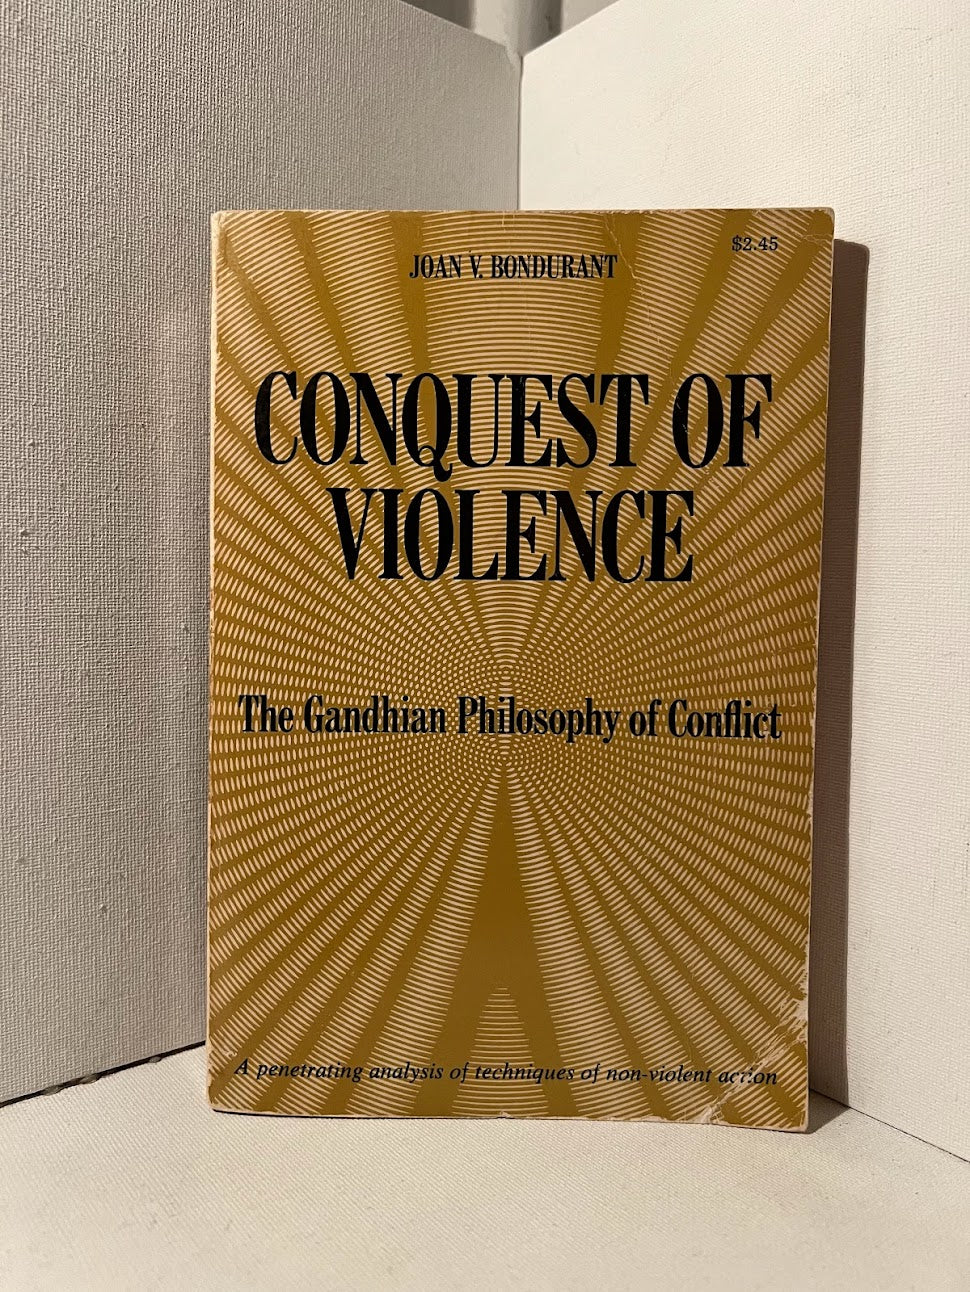 Conquest of Violence by Joan V. Bondurant